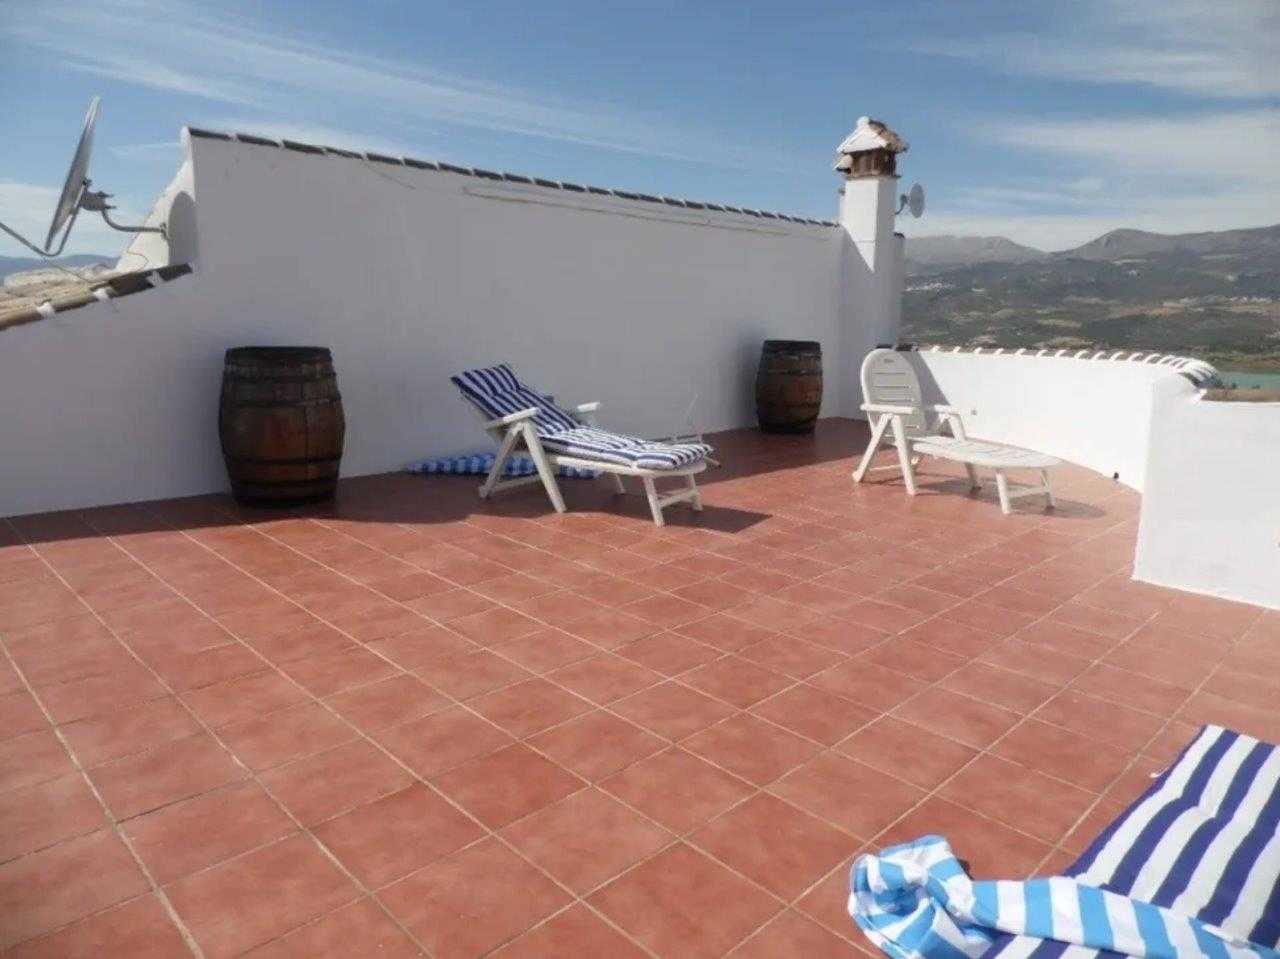 Casa VIVAndalusia, sunbathing on the roof terrace